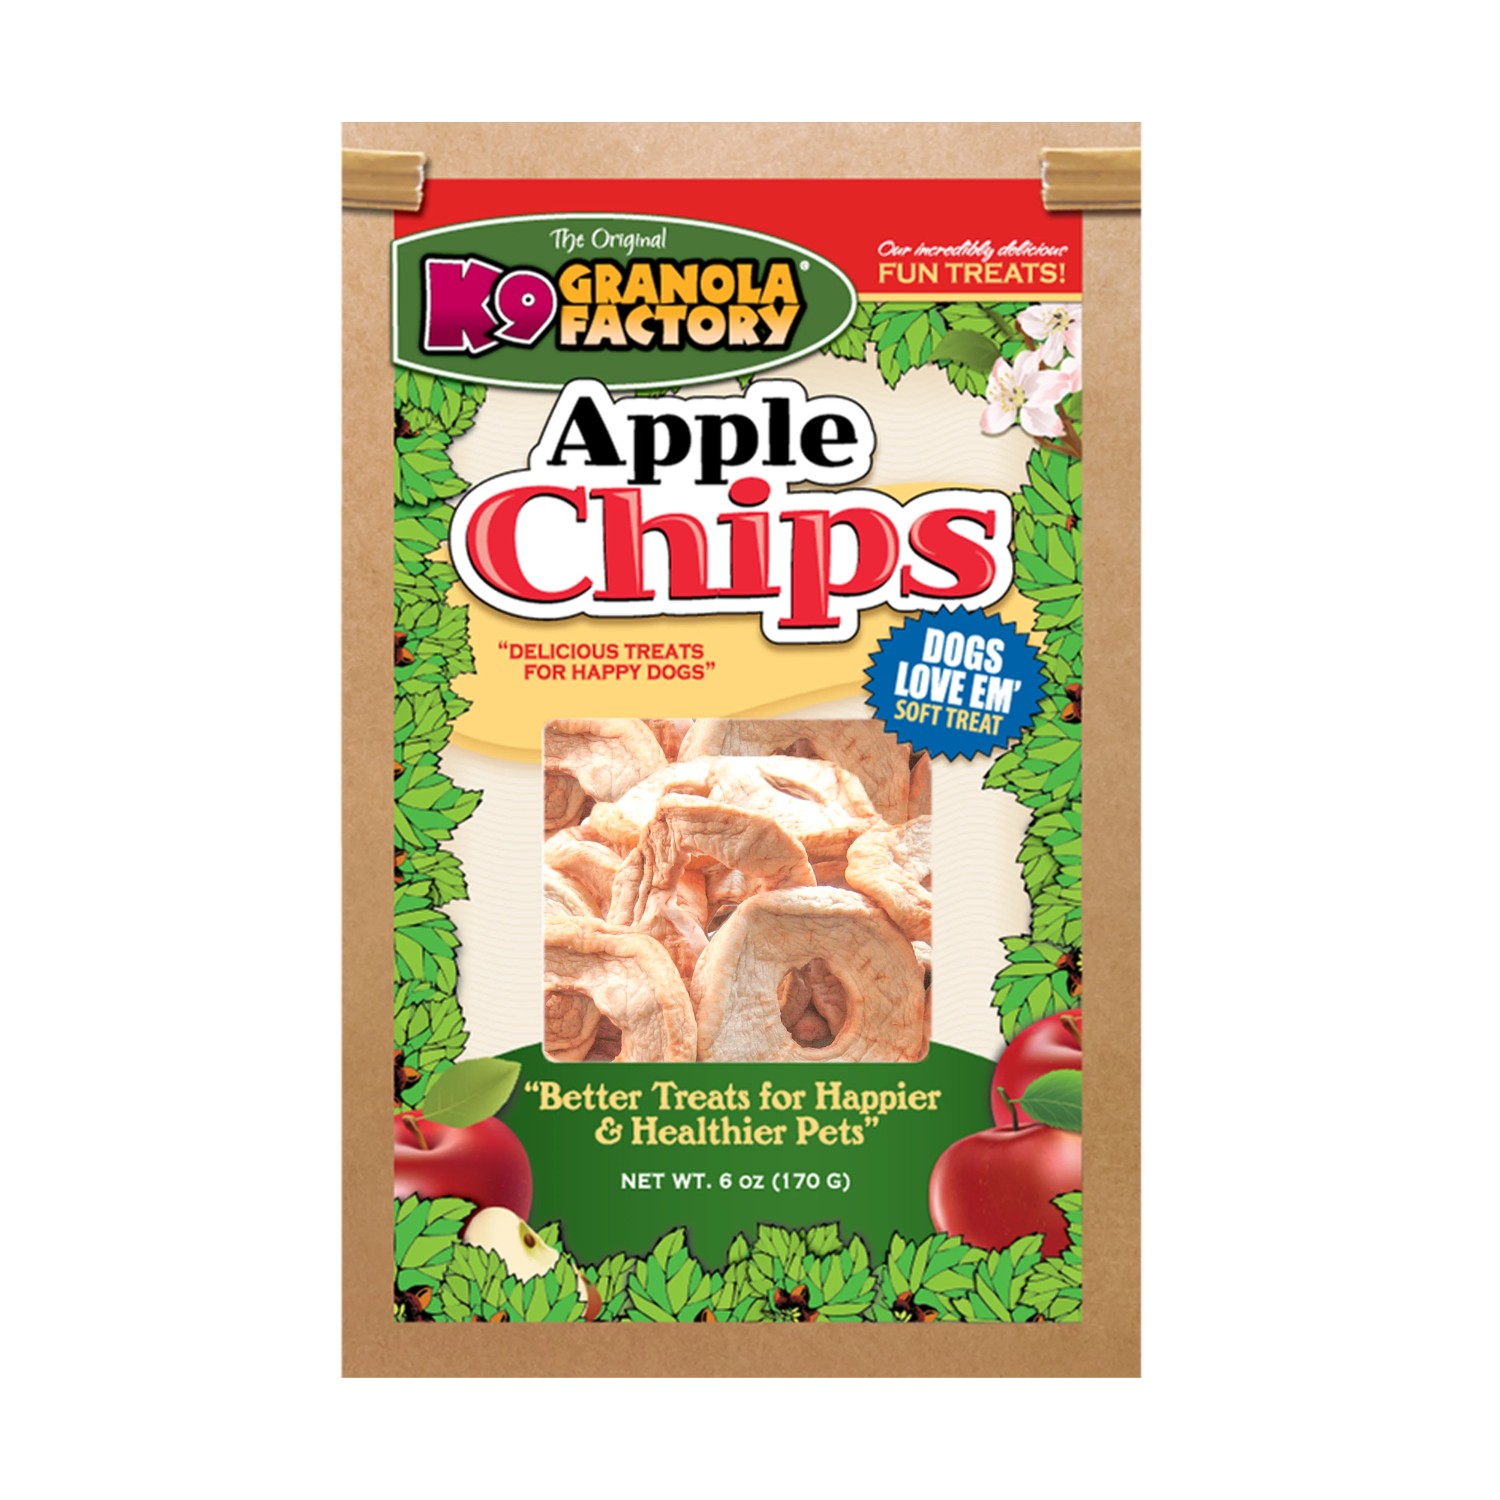 k9-granola-factory-apple-chips-dog-treats